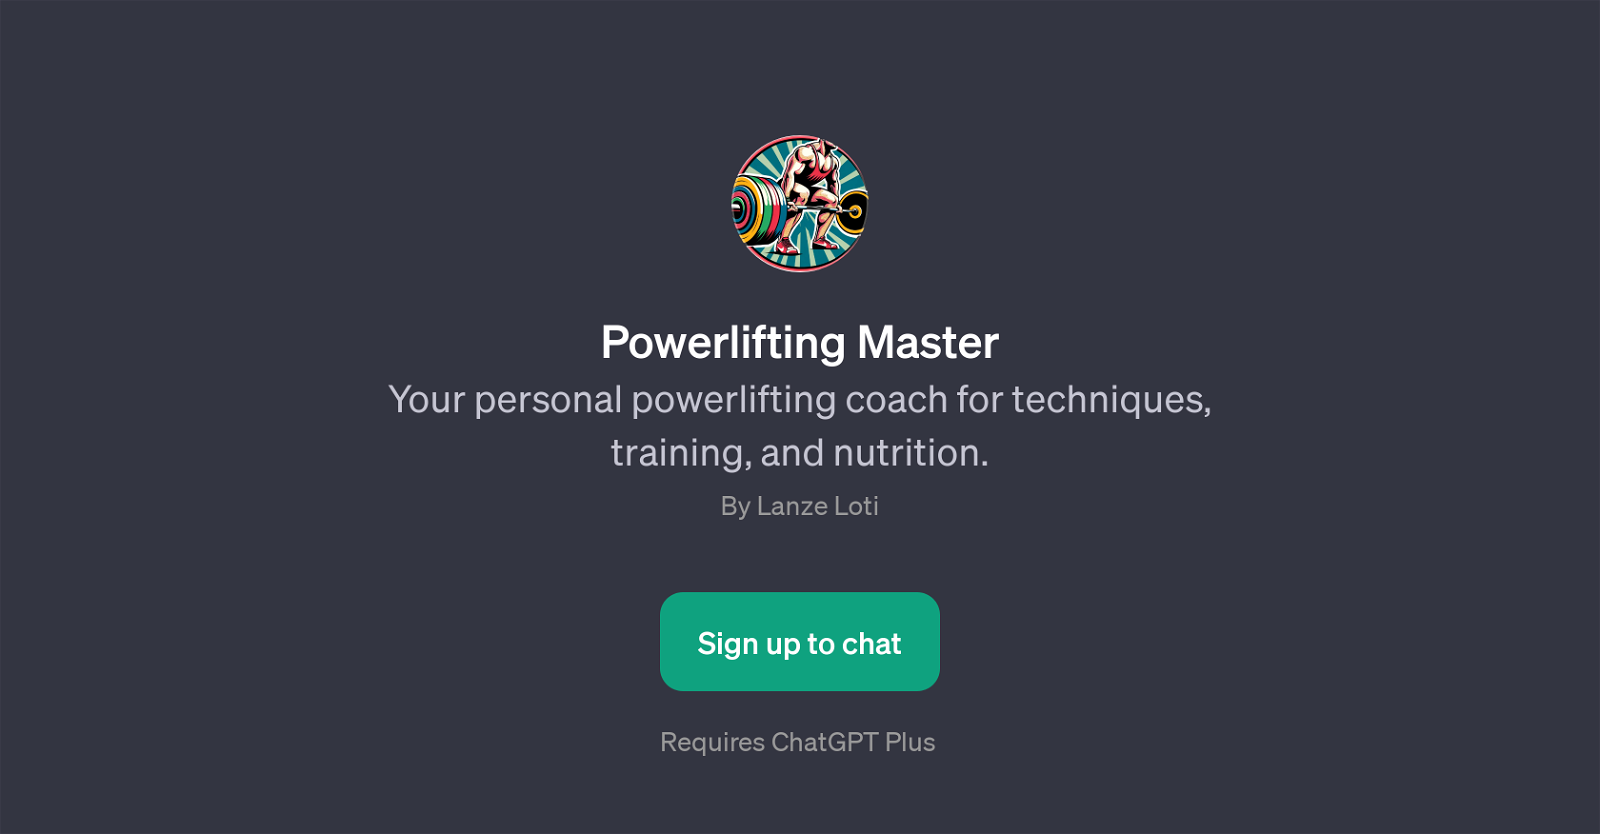 Powerlifting Master website